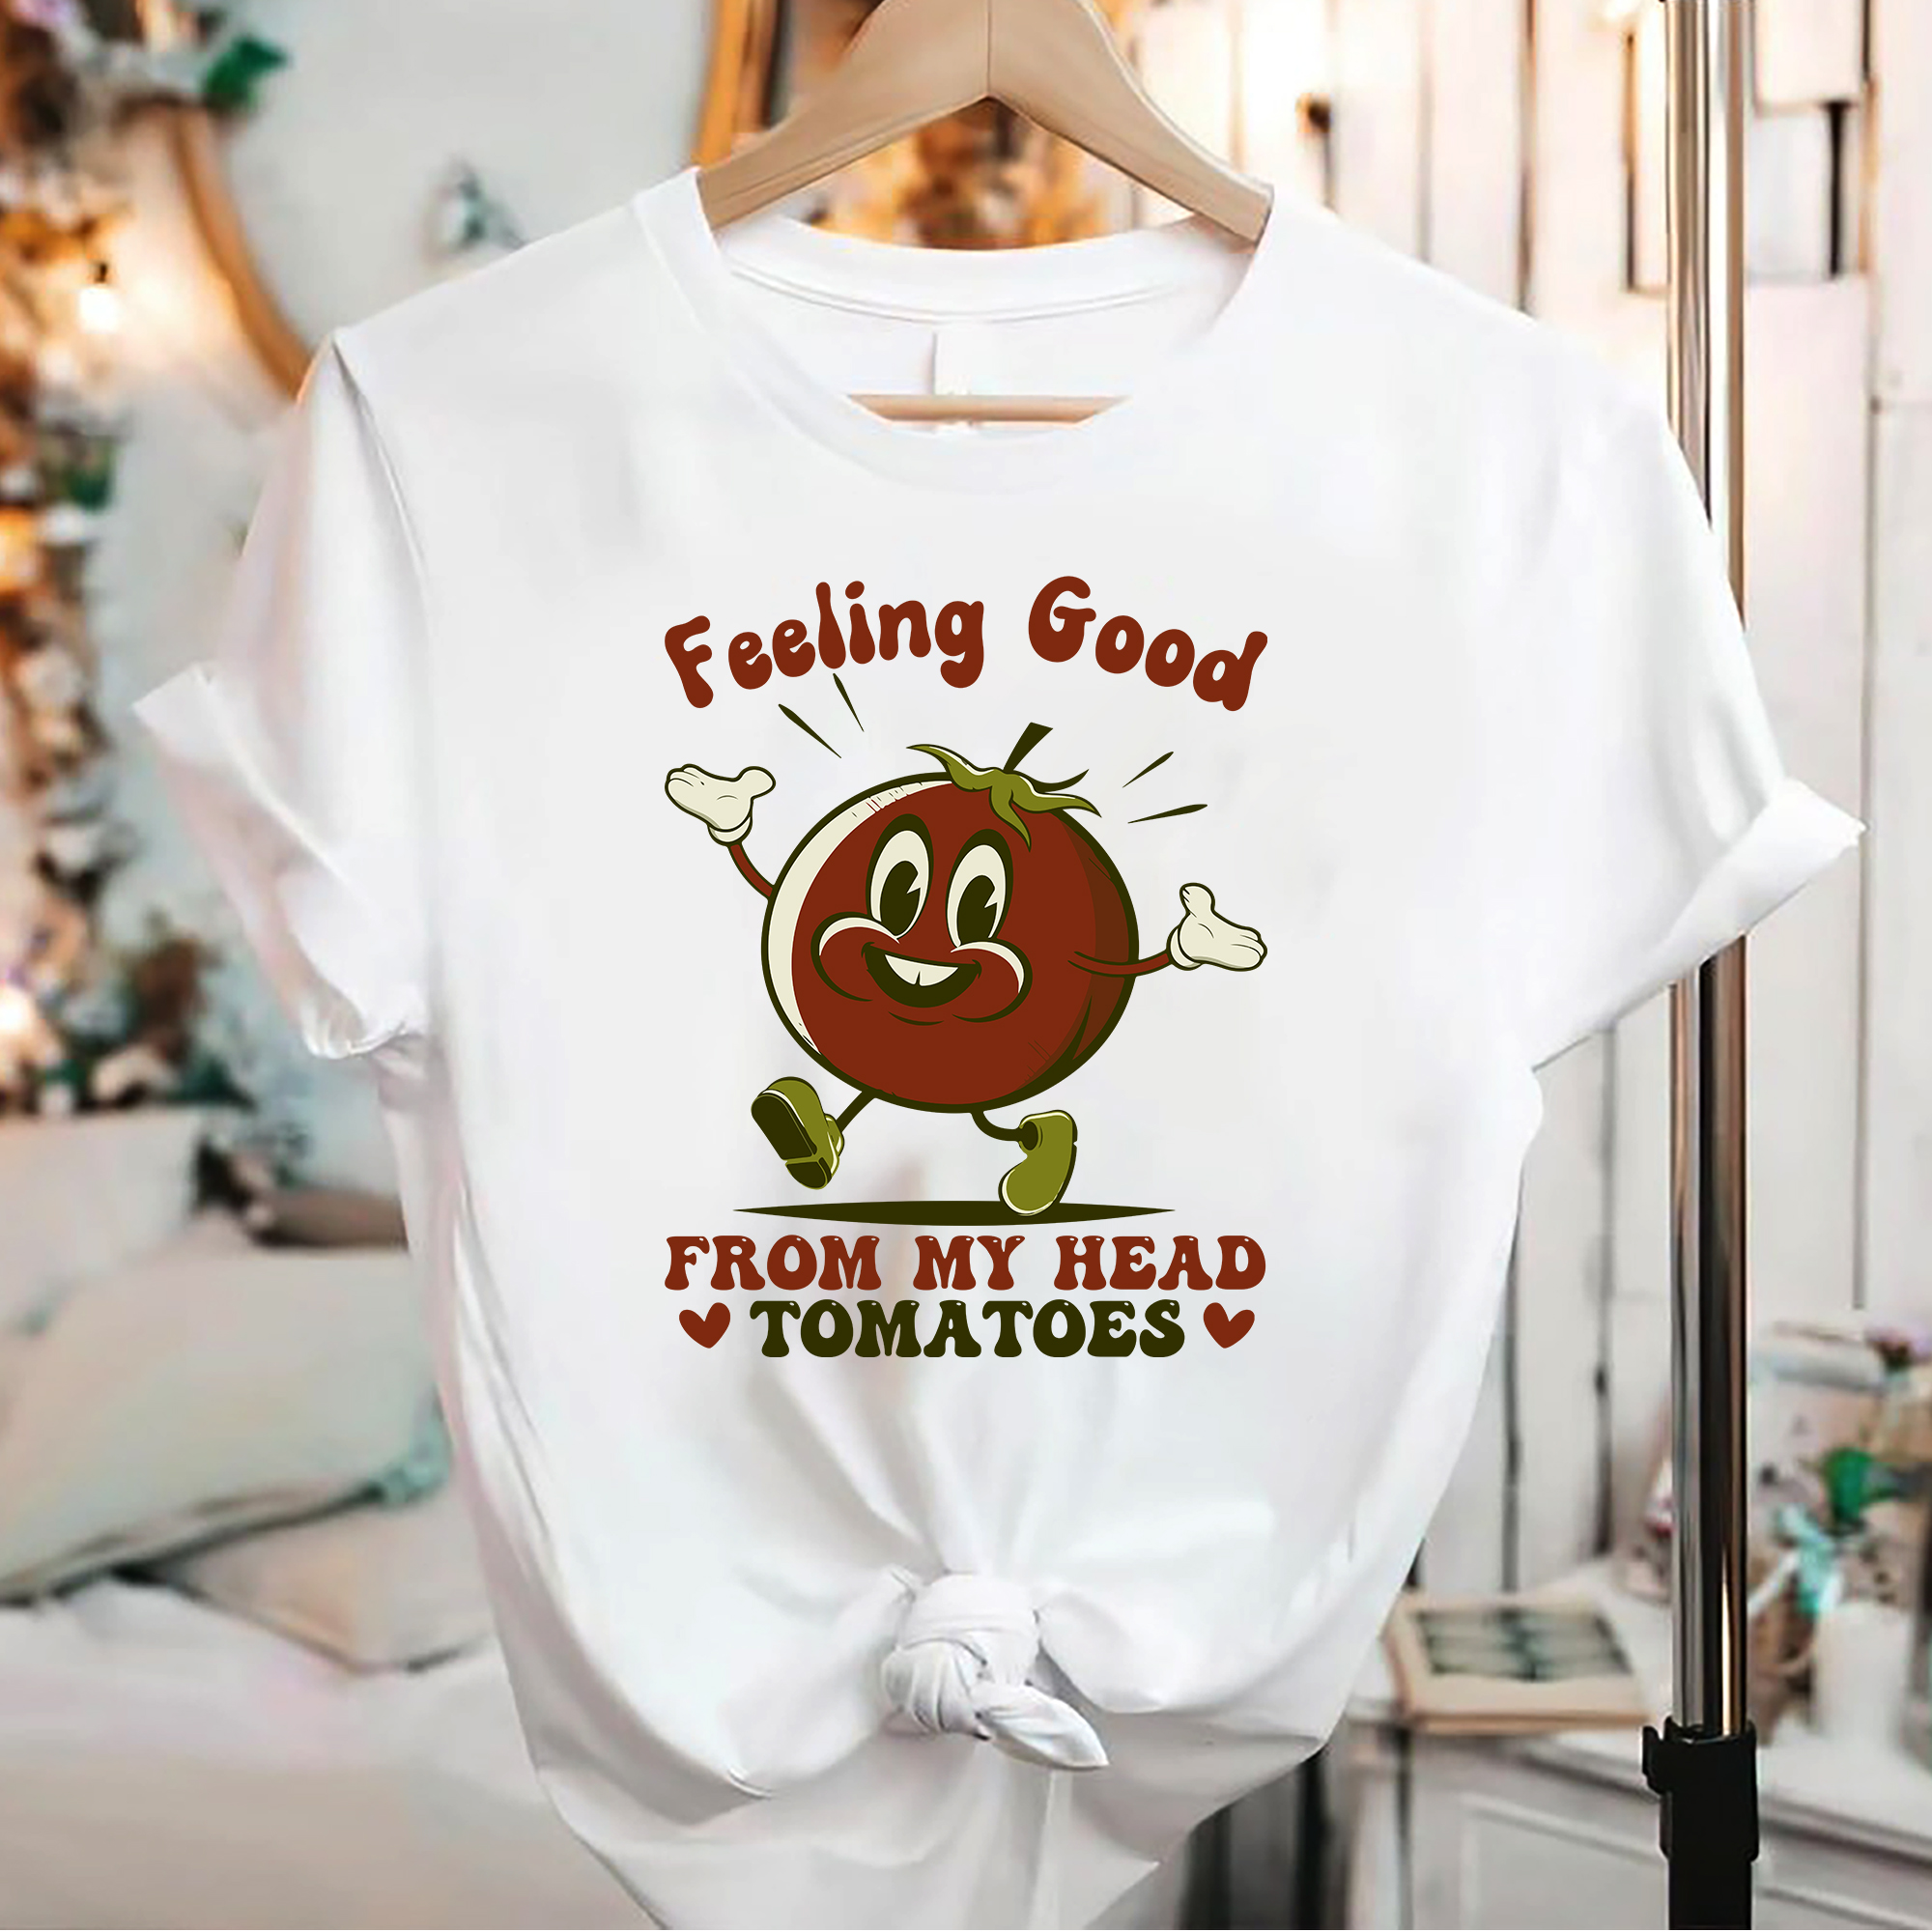 funny shirt designs sayings